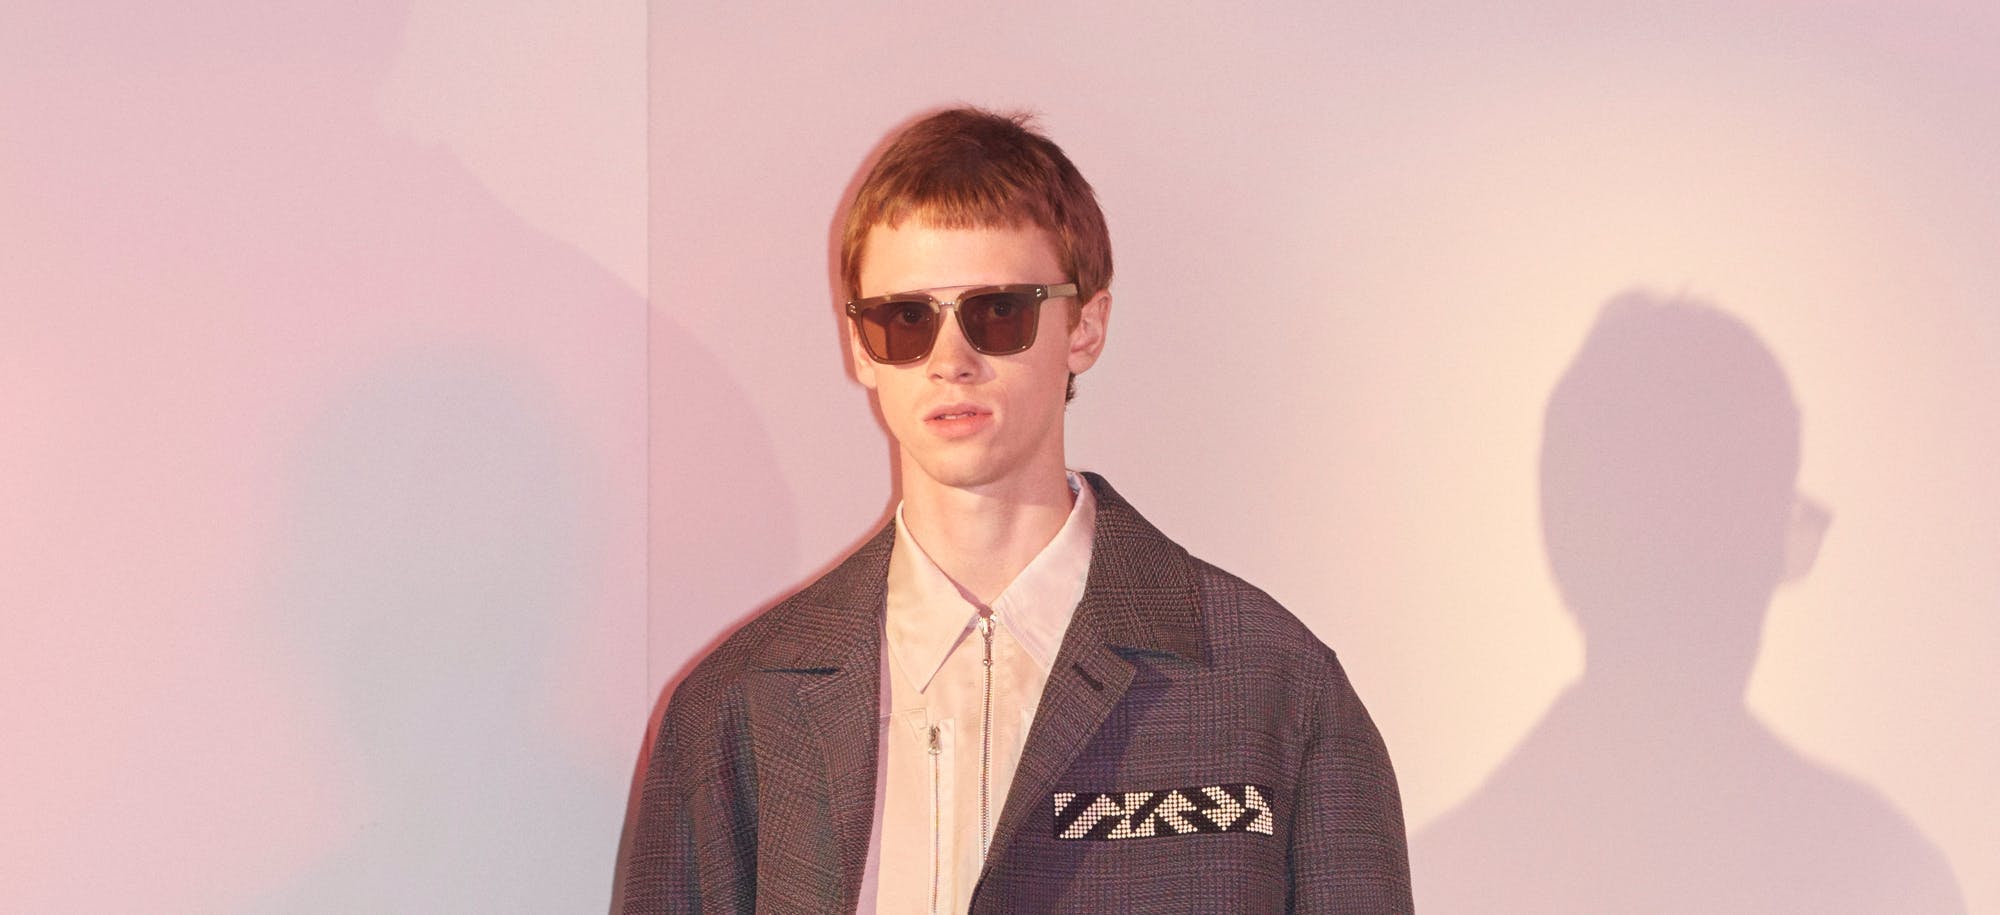 sunglasses accessories person suit coat overcoat clothing man jacket blazer